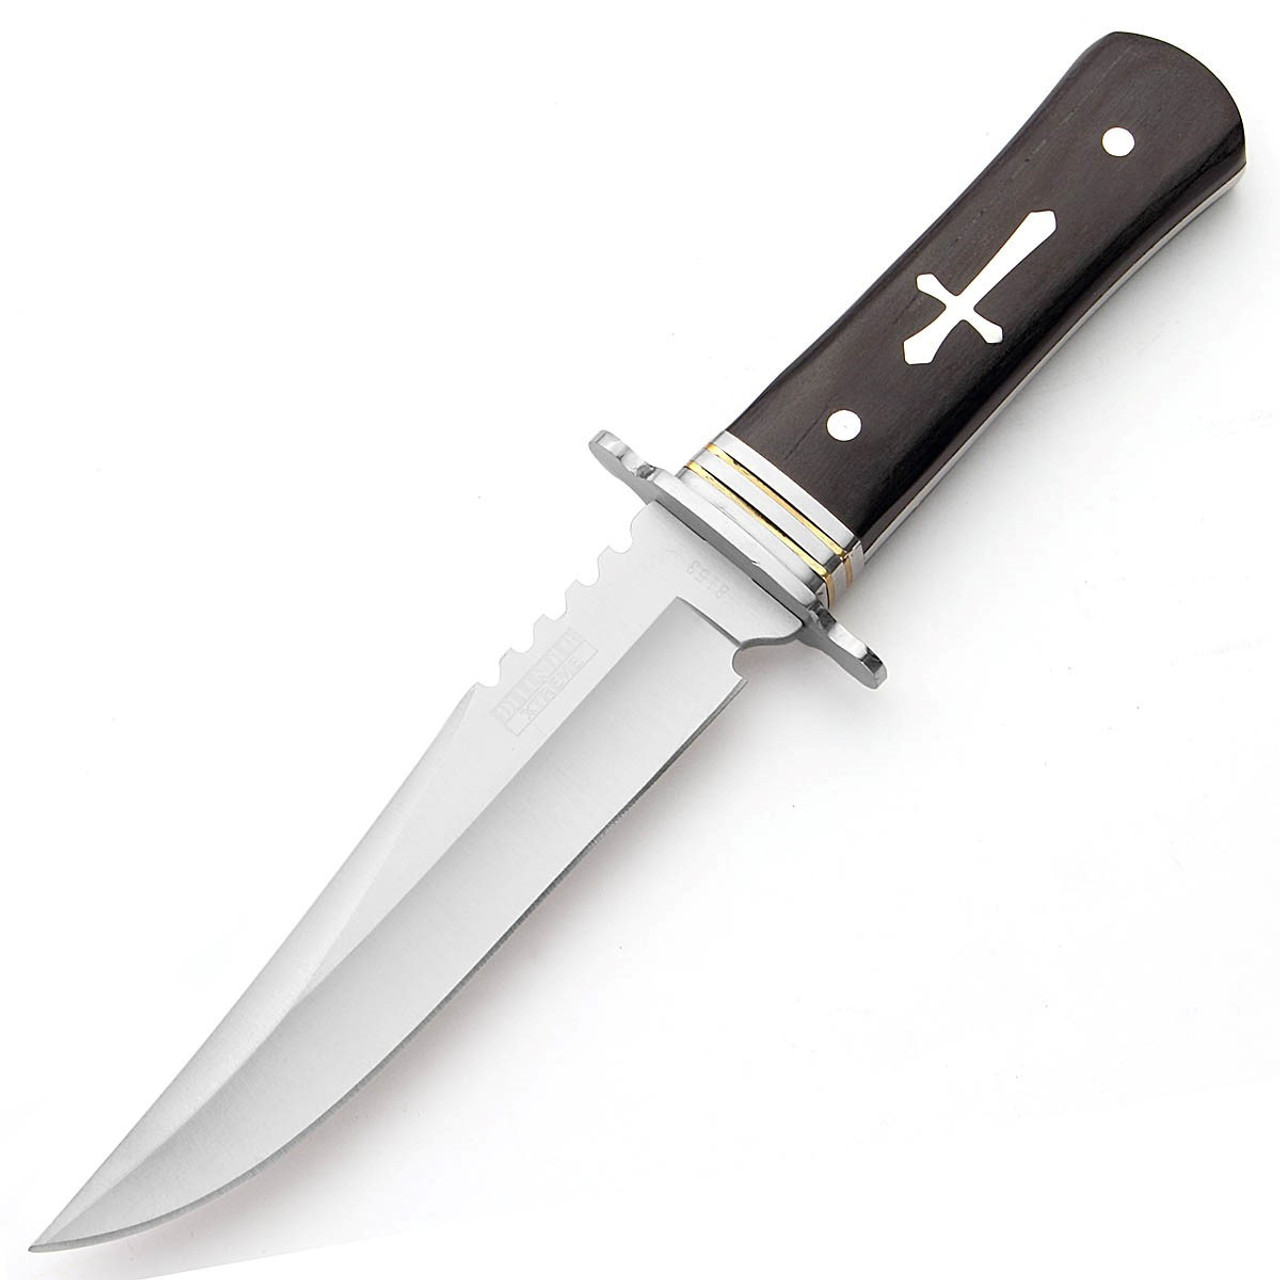 Buy LARGE TACTICAL HUNTING KNIFE DEFENDER 3 DAMASCUS STEEL